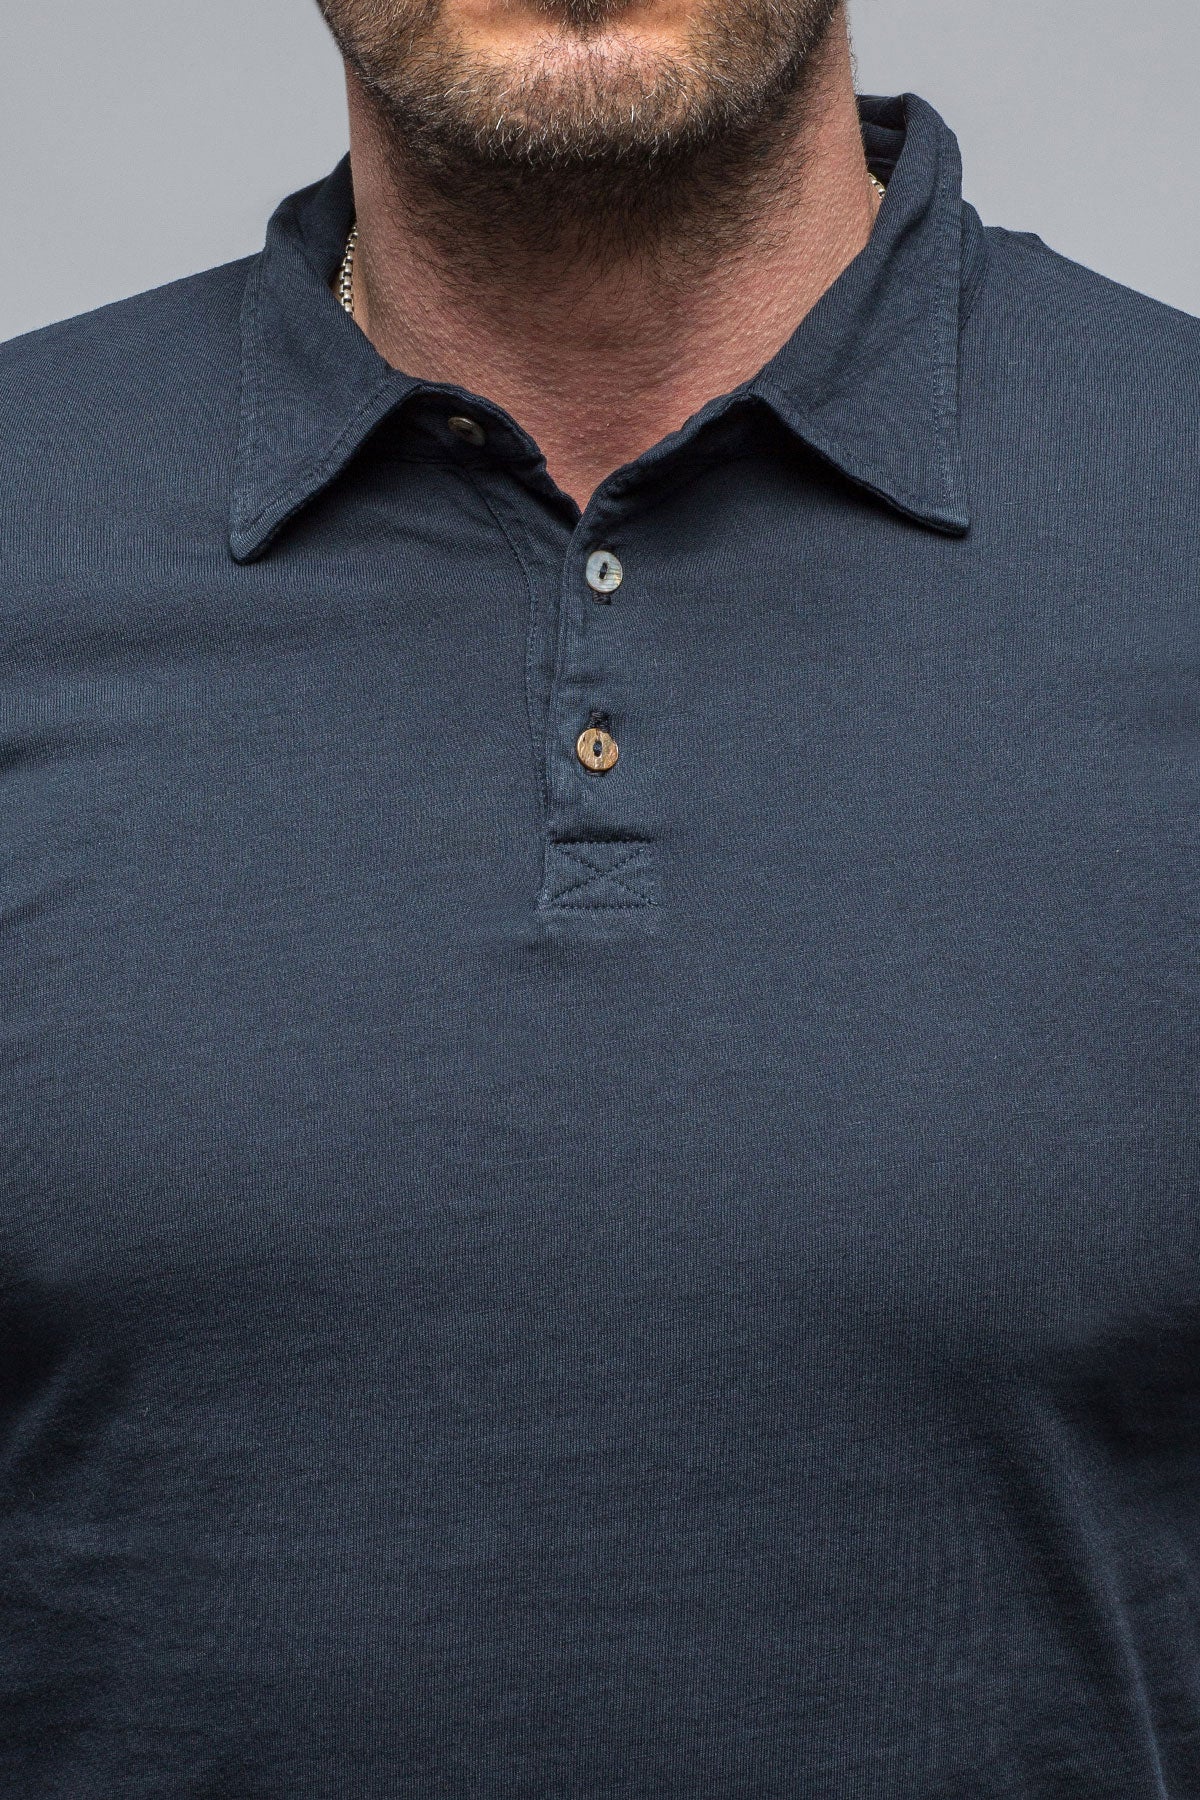 Torrance Long Sleeve Polo in Navy | Mens - Shirts - Polos | Gimo's Cotton